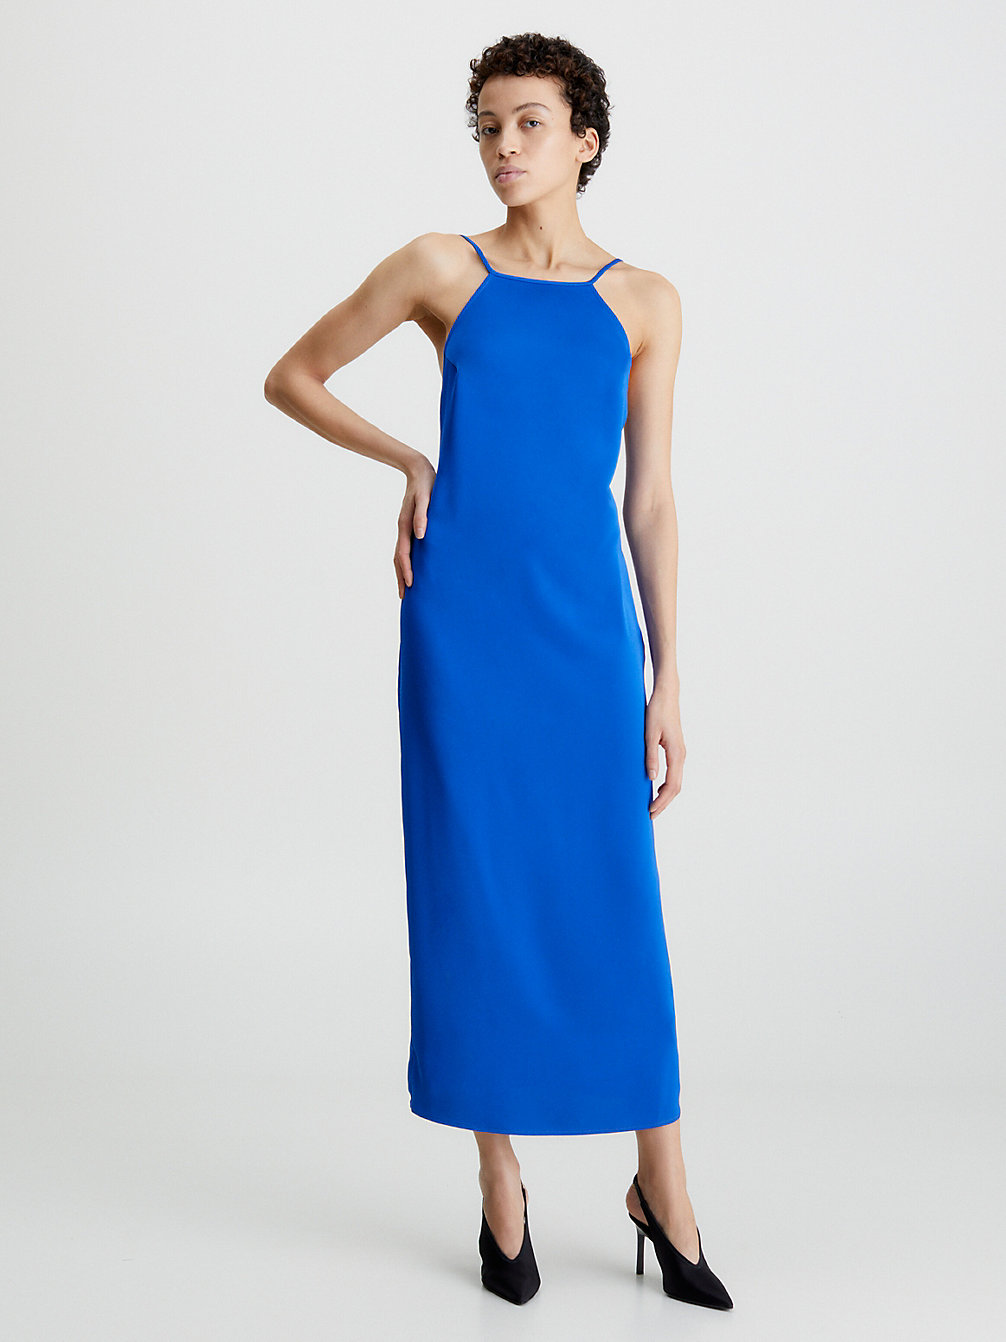 ULTRA BLUE Slim Halter Low Back Dress undefined women Calvin Klein